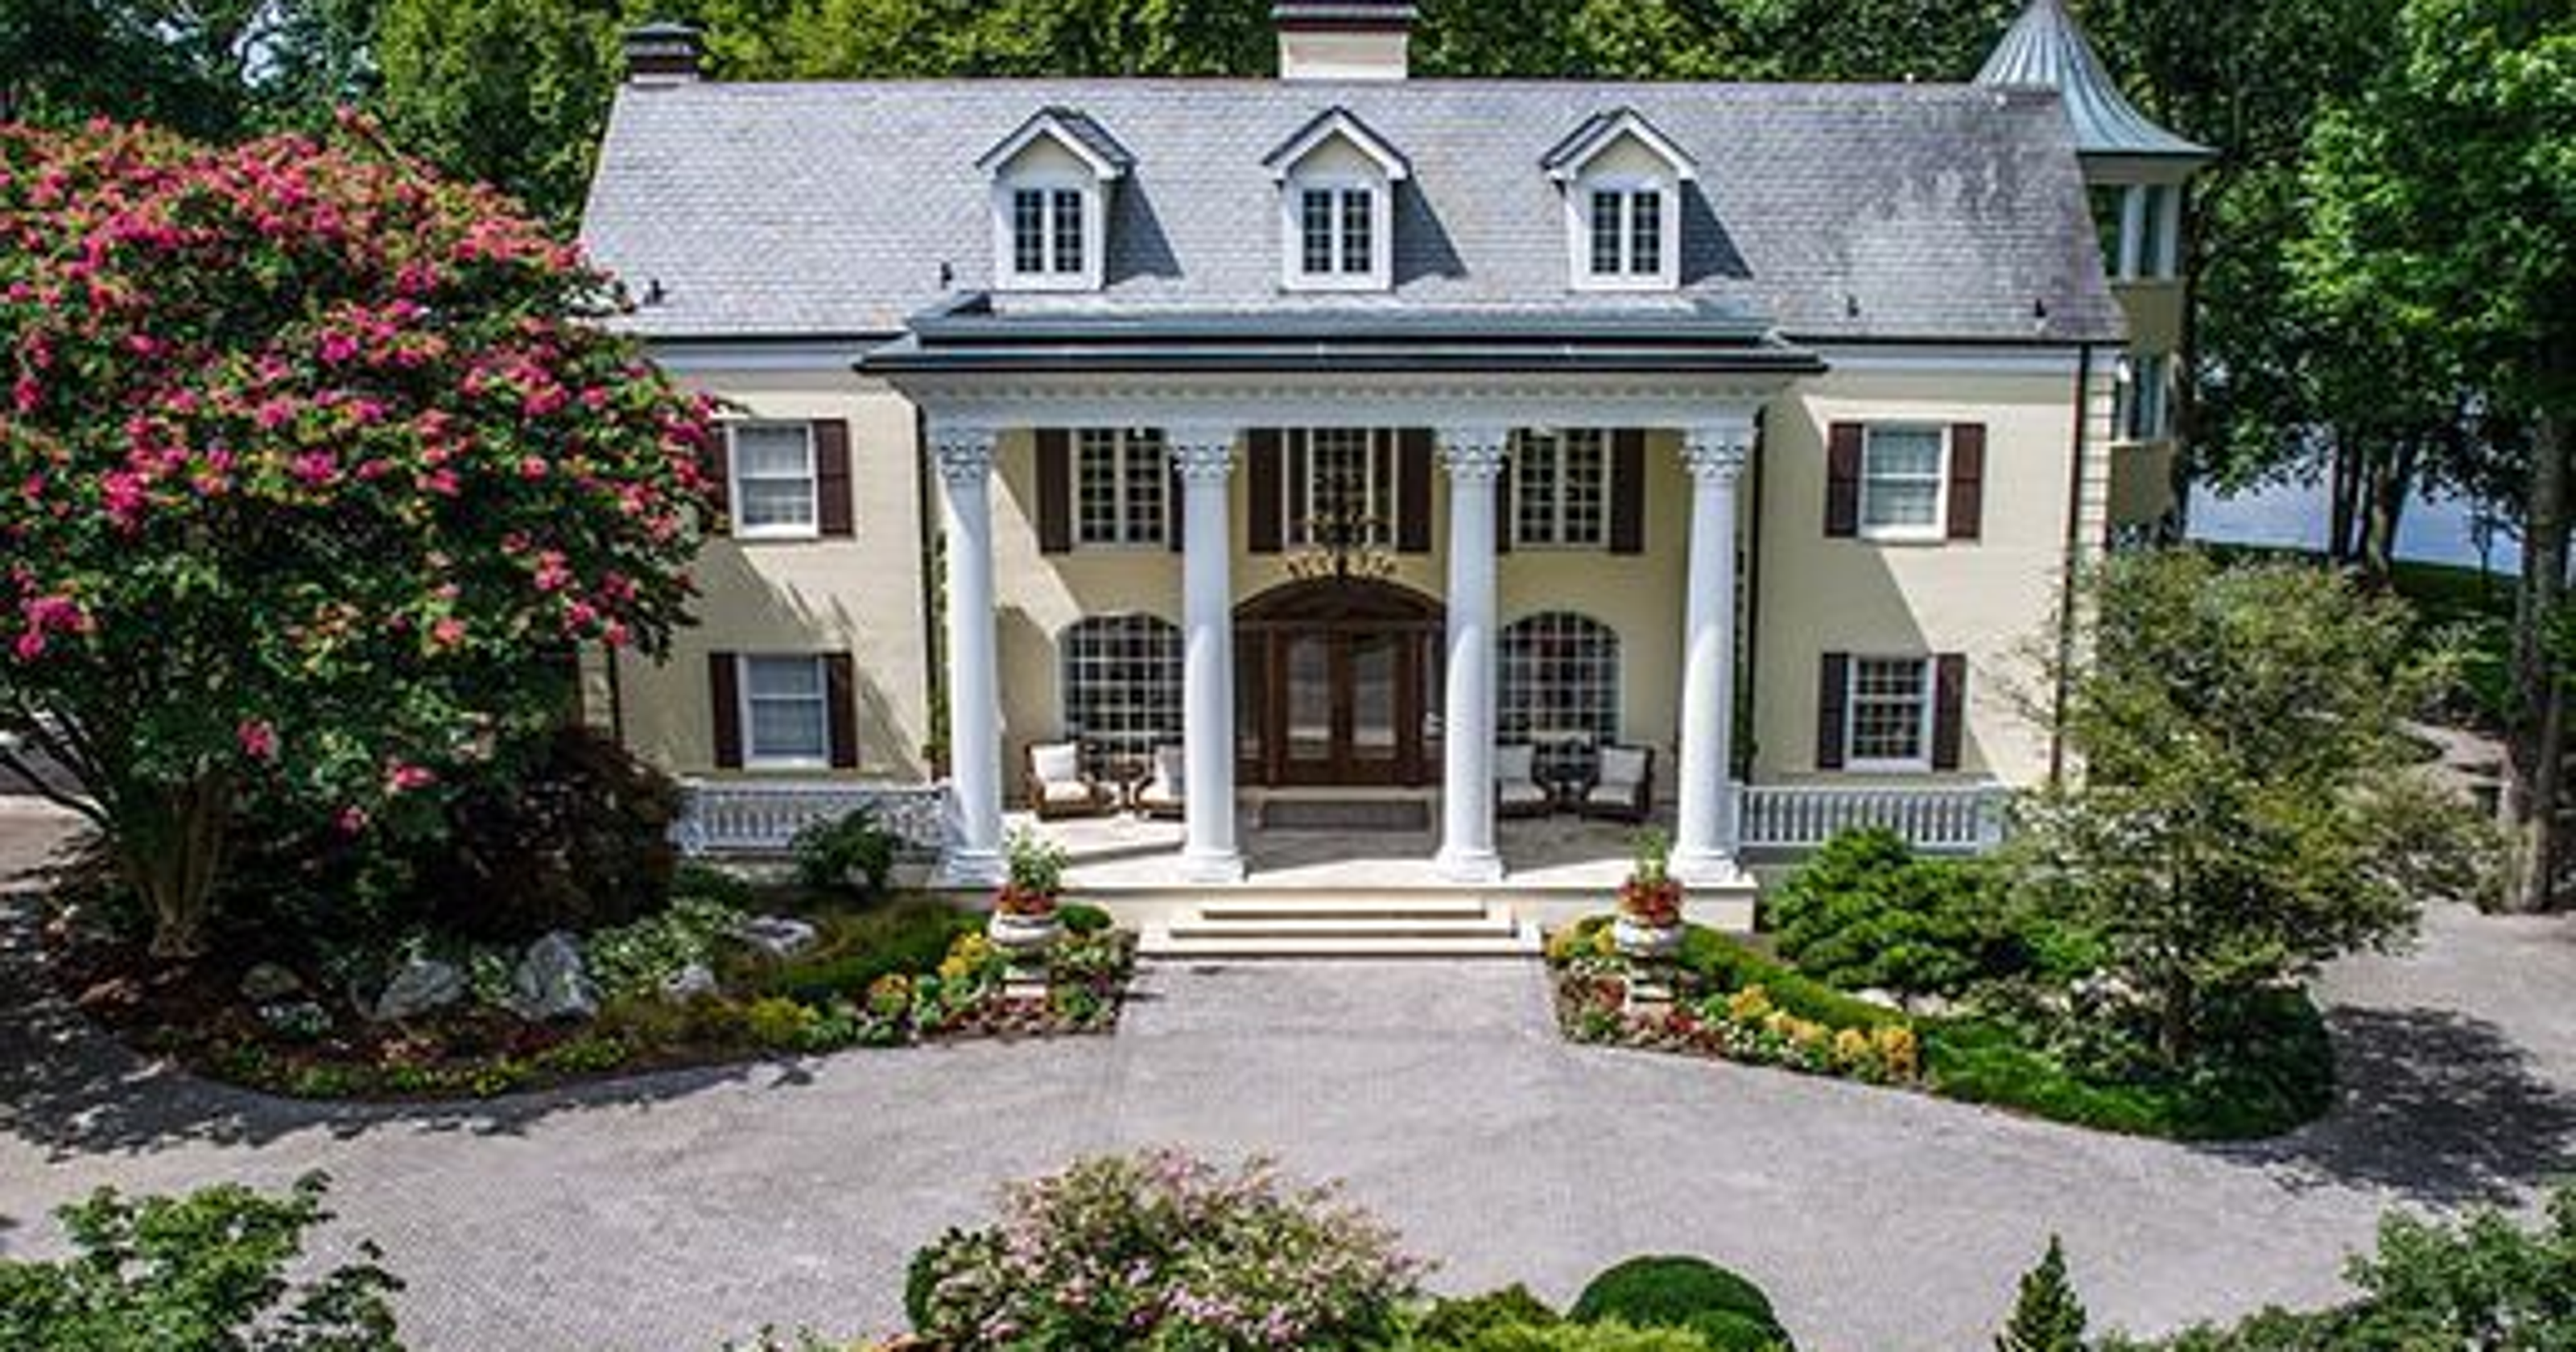 Reba McEntire’s Wilson County estate sold for 5 million; 15home